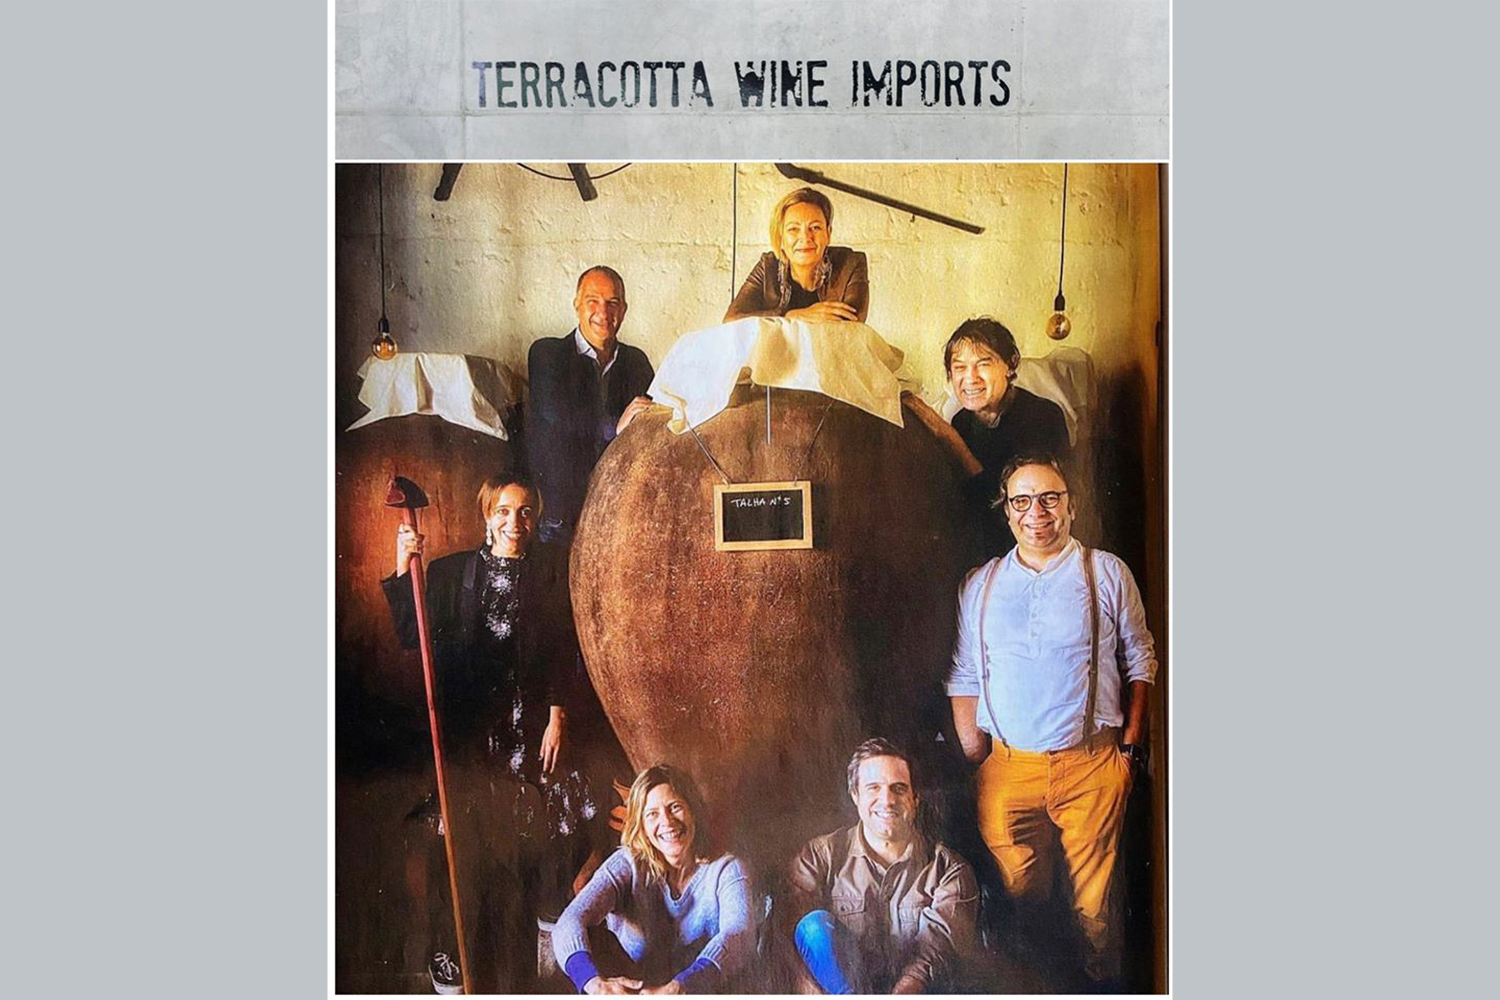 Zorah-ը միացել է Terracota Wine Imports նախագծին